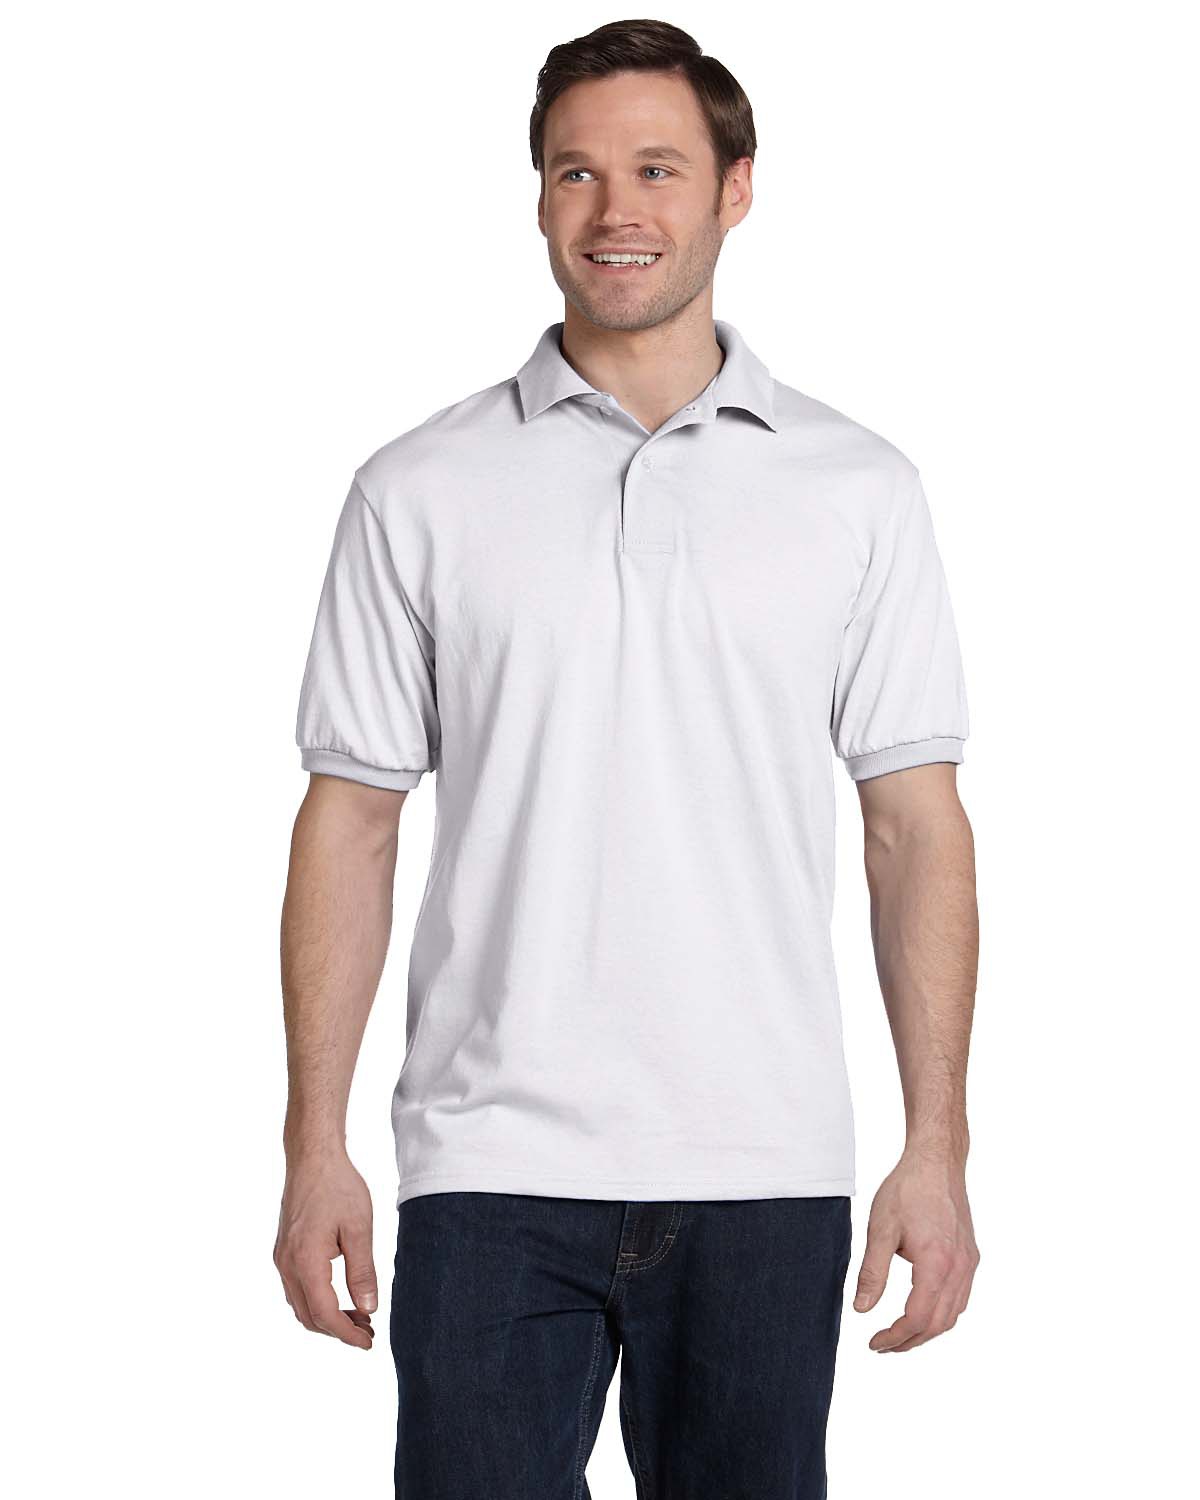 Hanes 054 Men's Comfortblend Ecosmart Jersey Knit Shirt-Veetrends.com